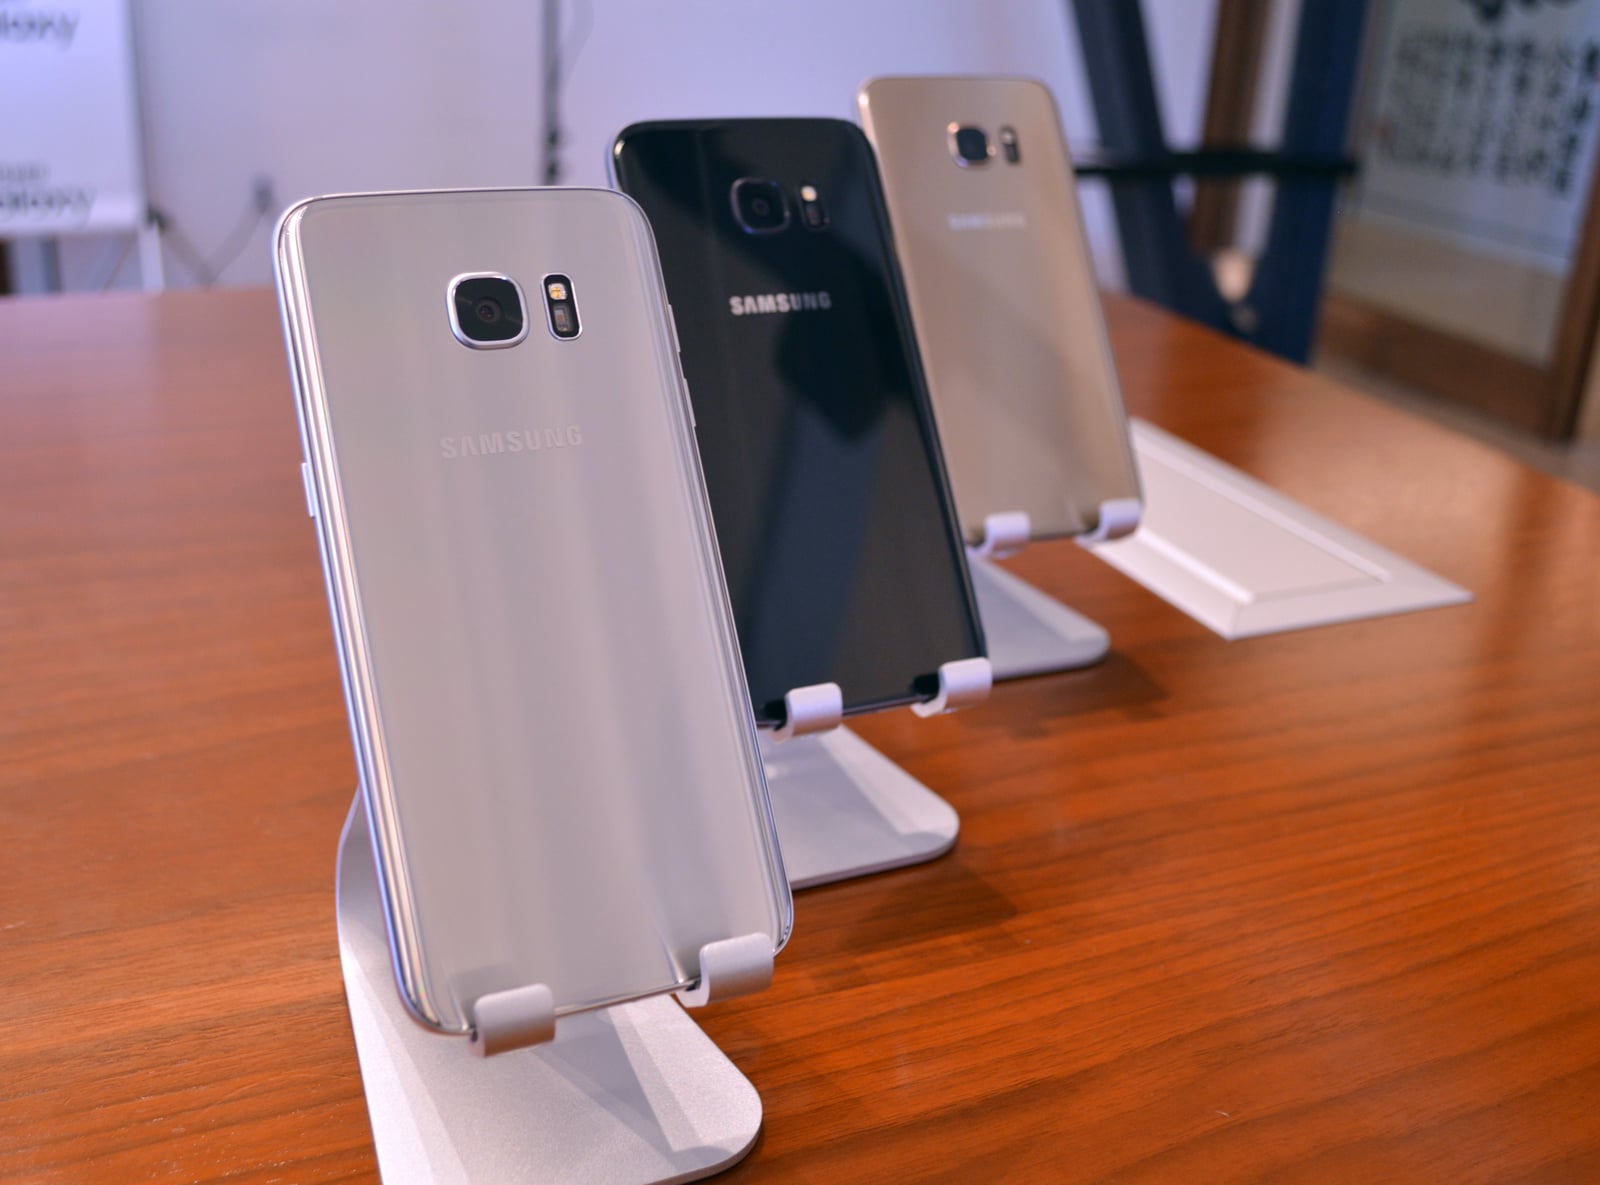 toon Diversiteit Terugroepen Samsung Galaxy S7 and Galaxy S7 Edge | POPSUGAR Tech